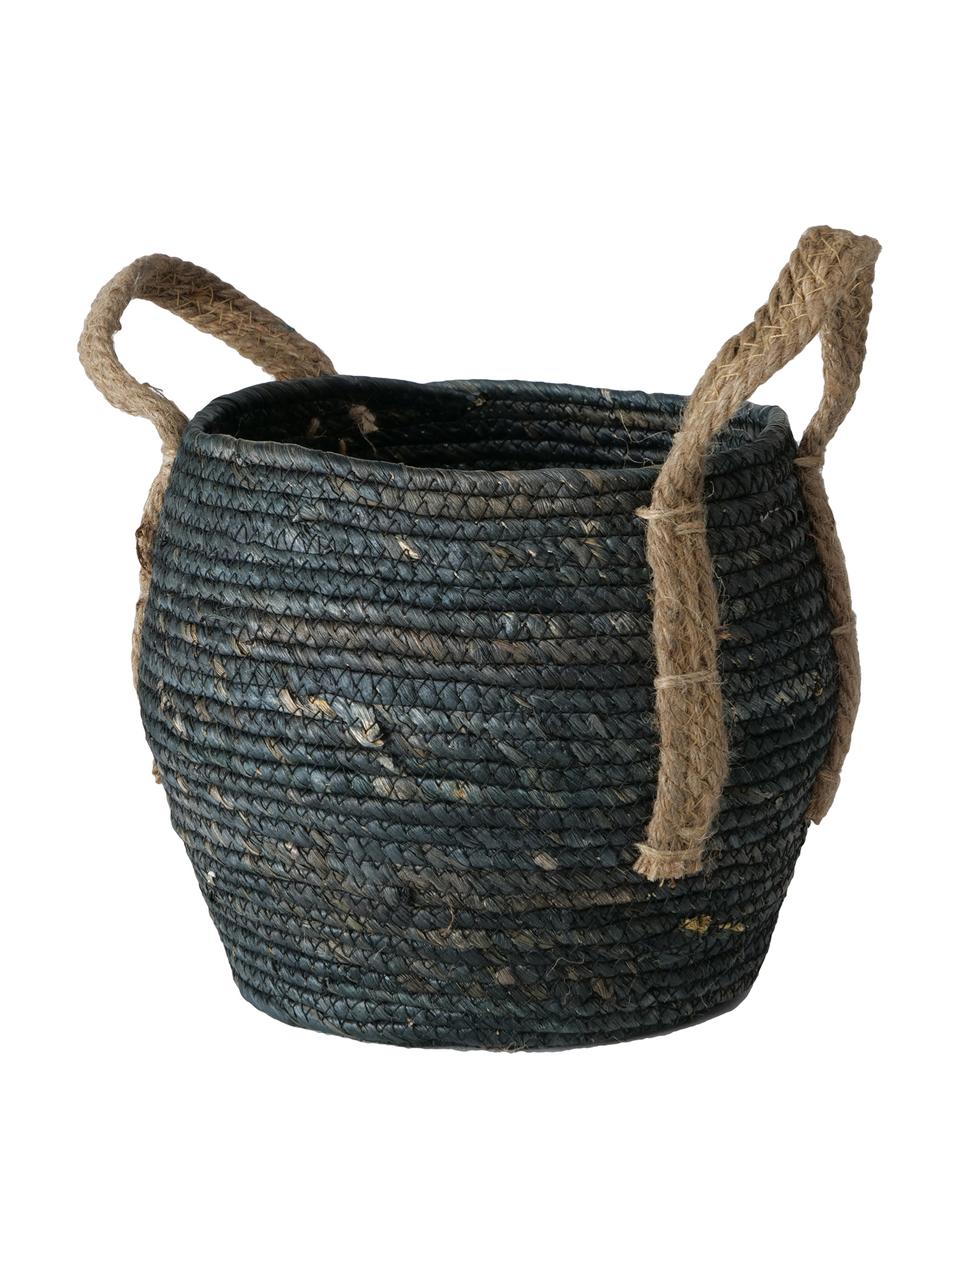 Set de cesta artesanales Takeo, 3 pzas., Asas: yute, Negro, Set de diferentes tamaños